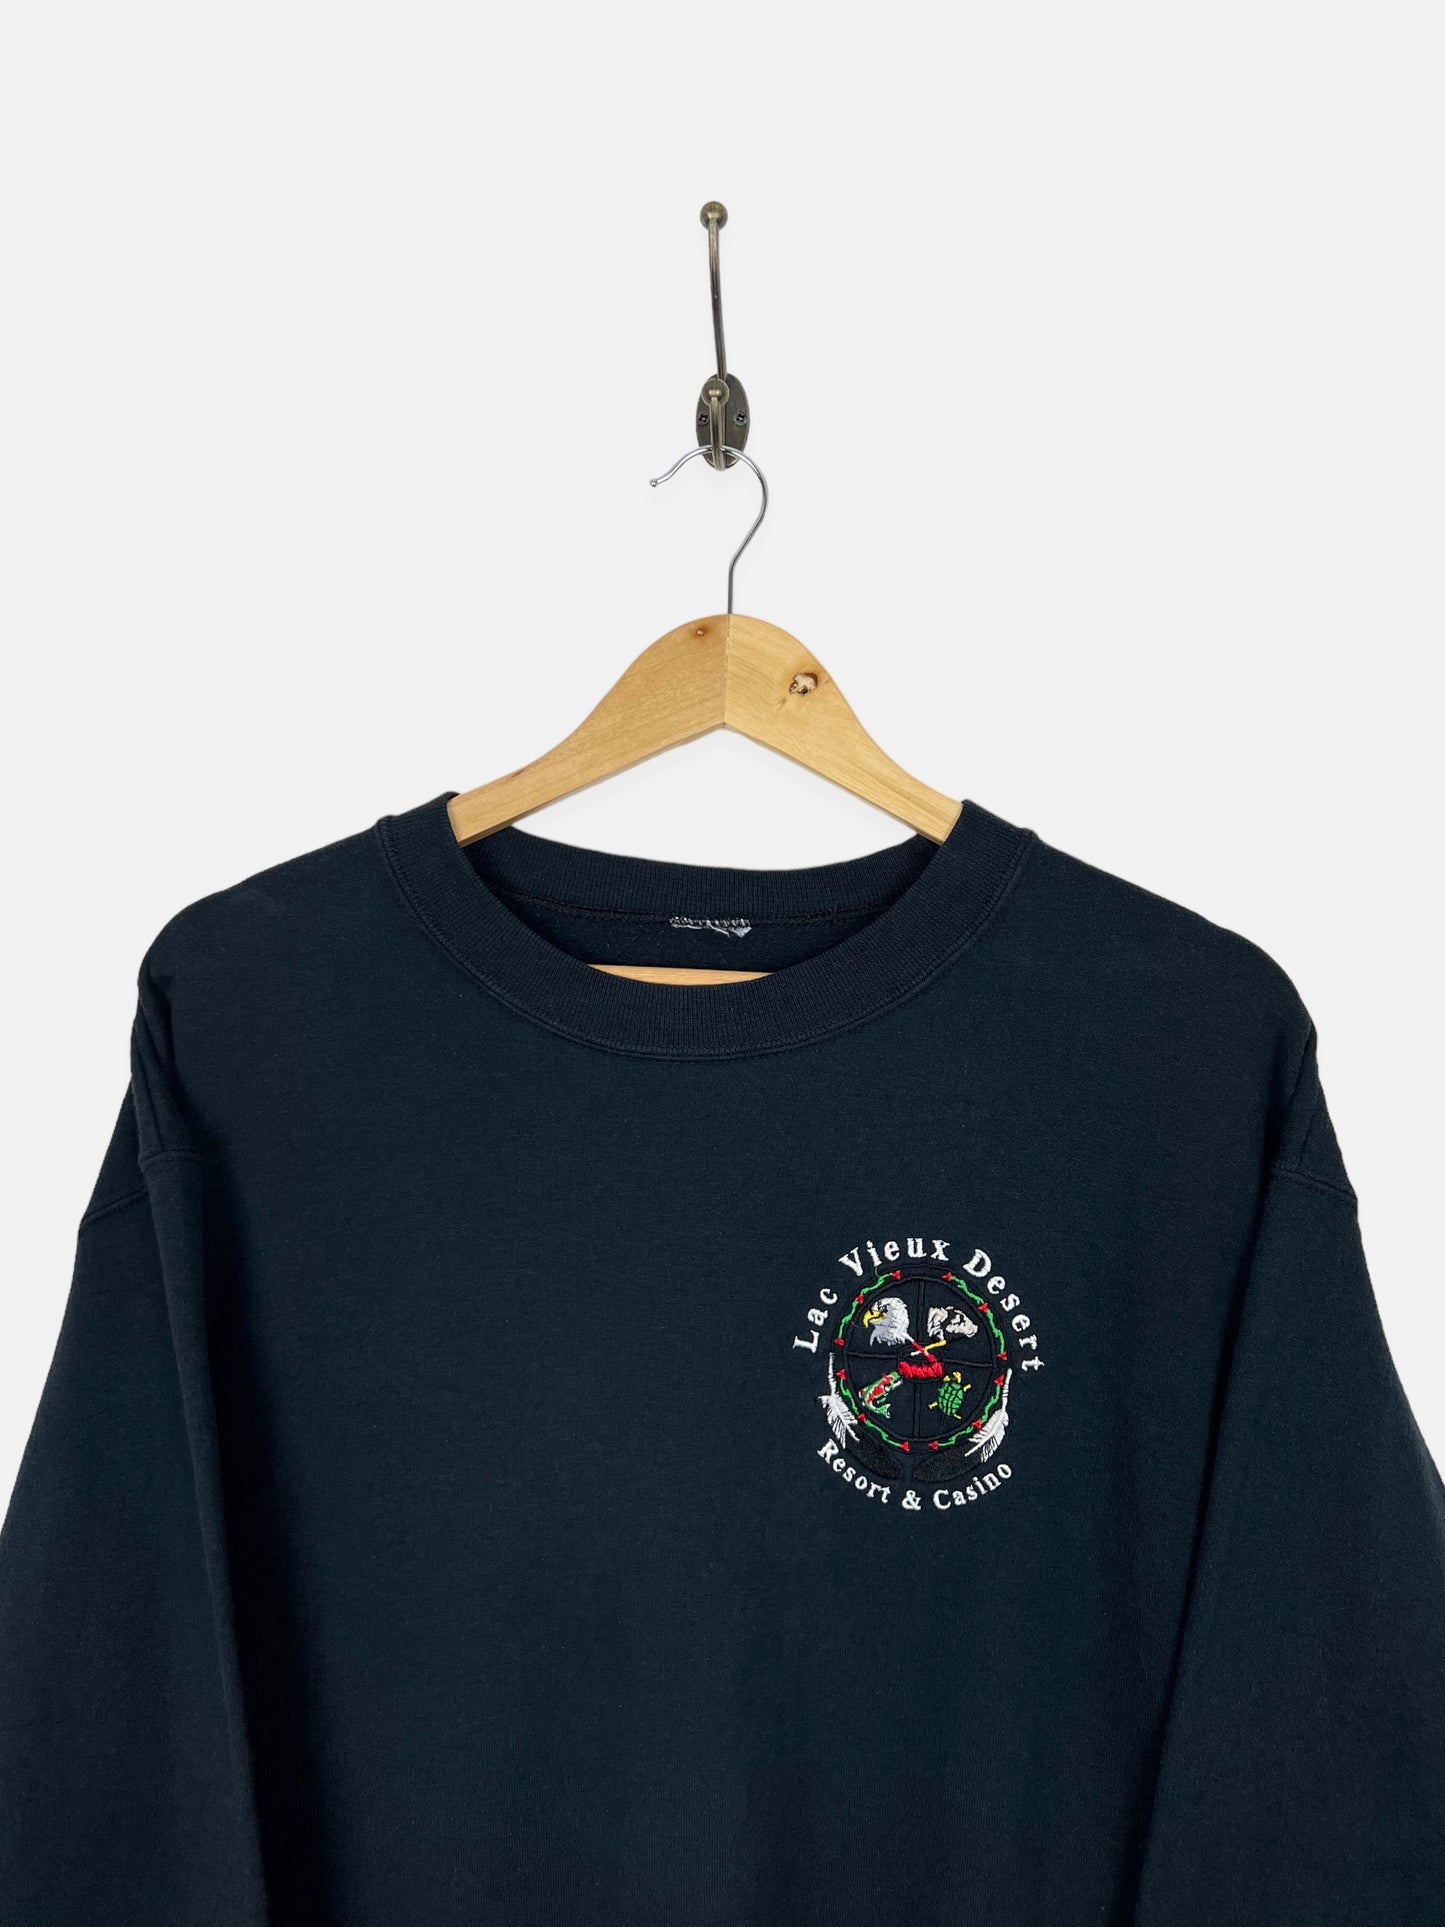 90's Lac Vieux Desert Resort & Casino Embroidered Vintage Sweatshirt Size M-L